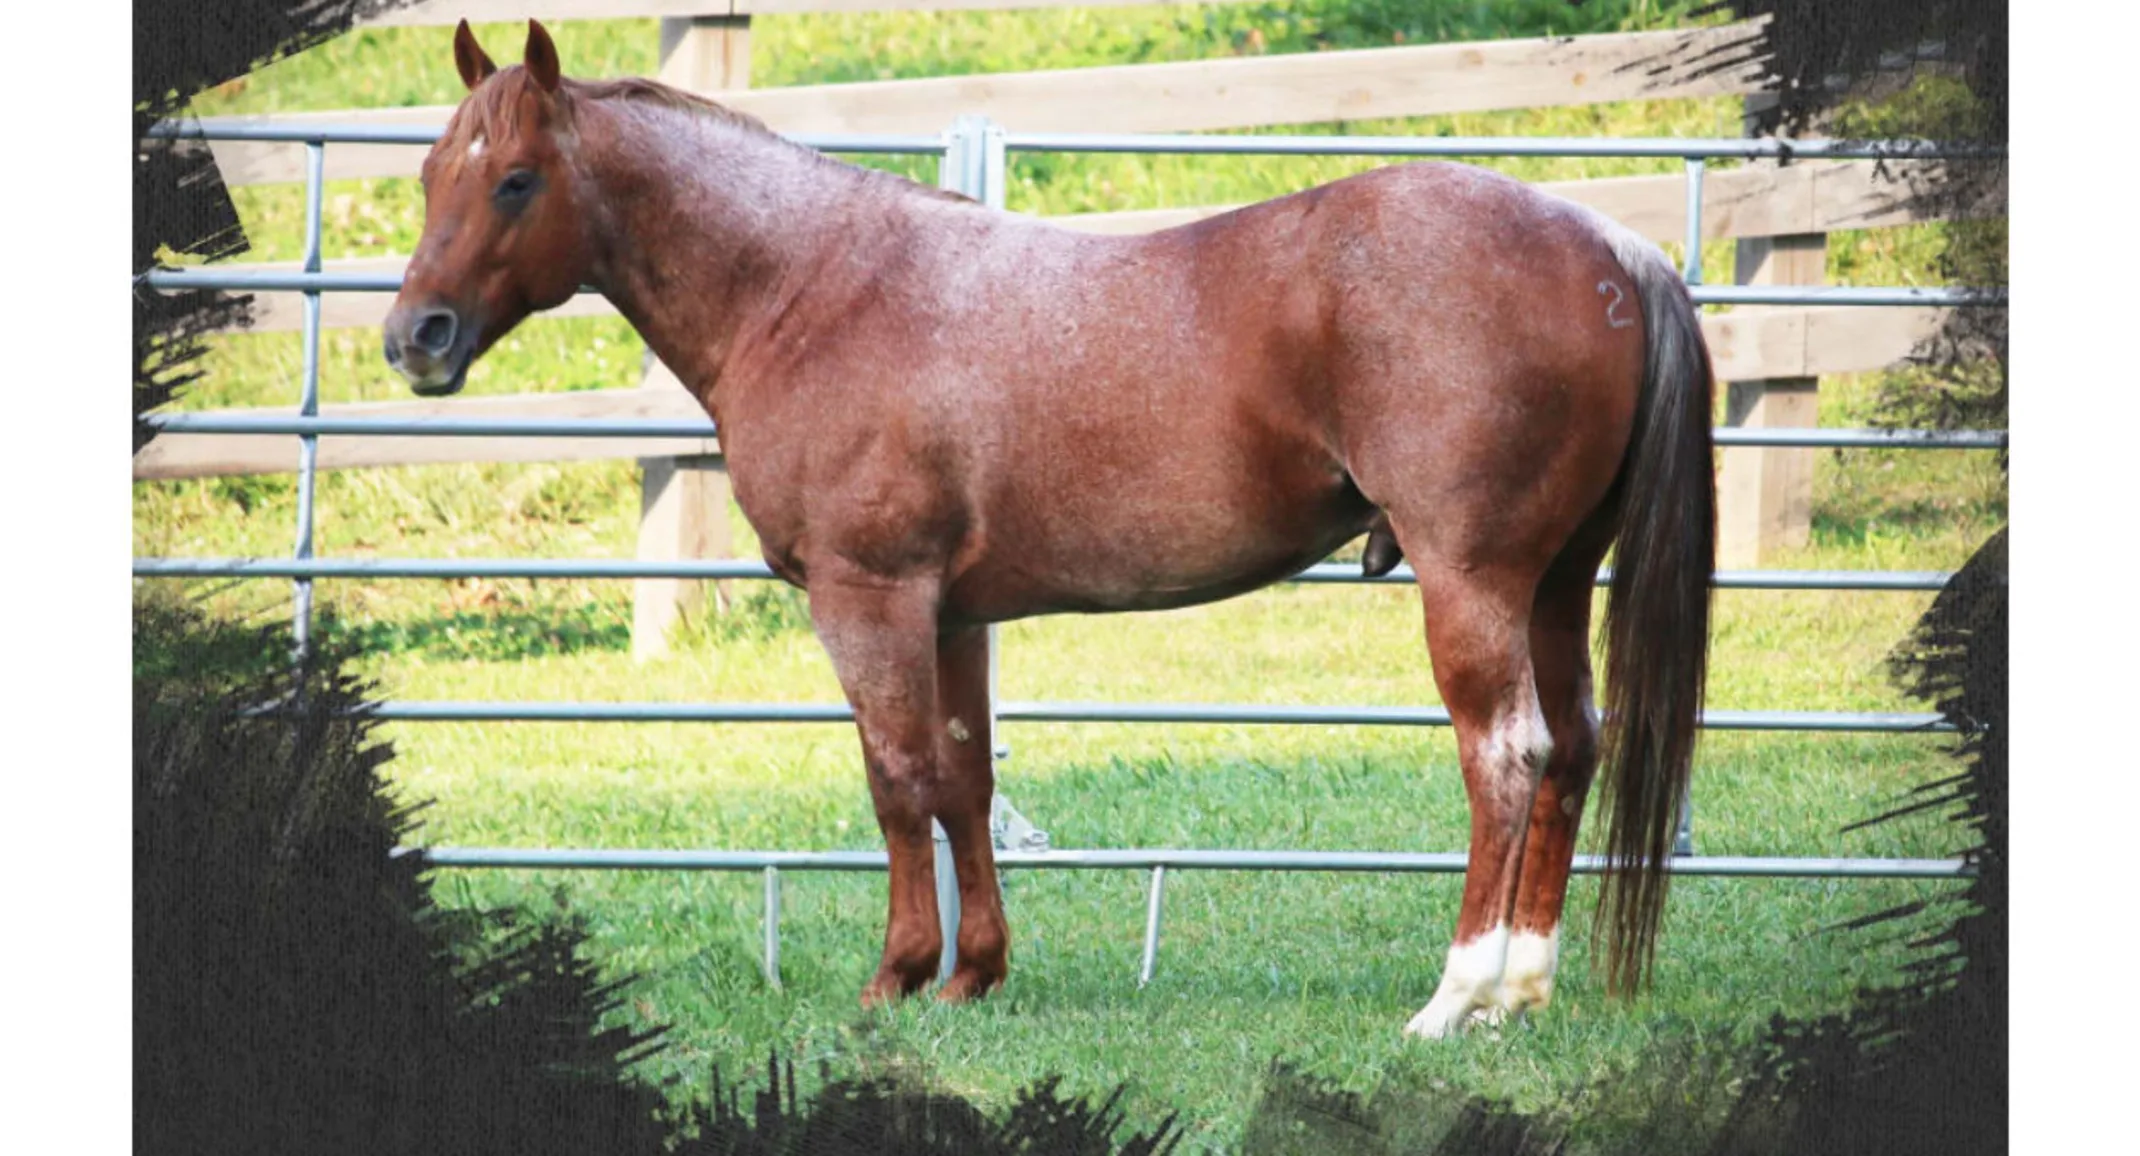 Metallic Word 16, a brown horse standing in grass